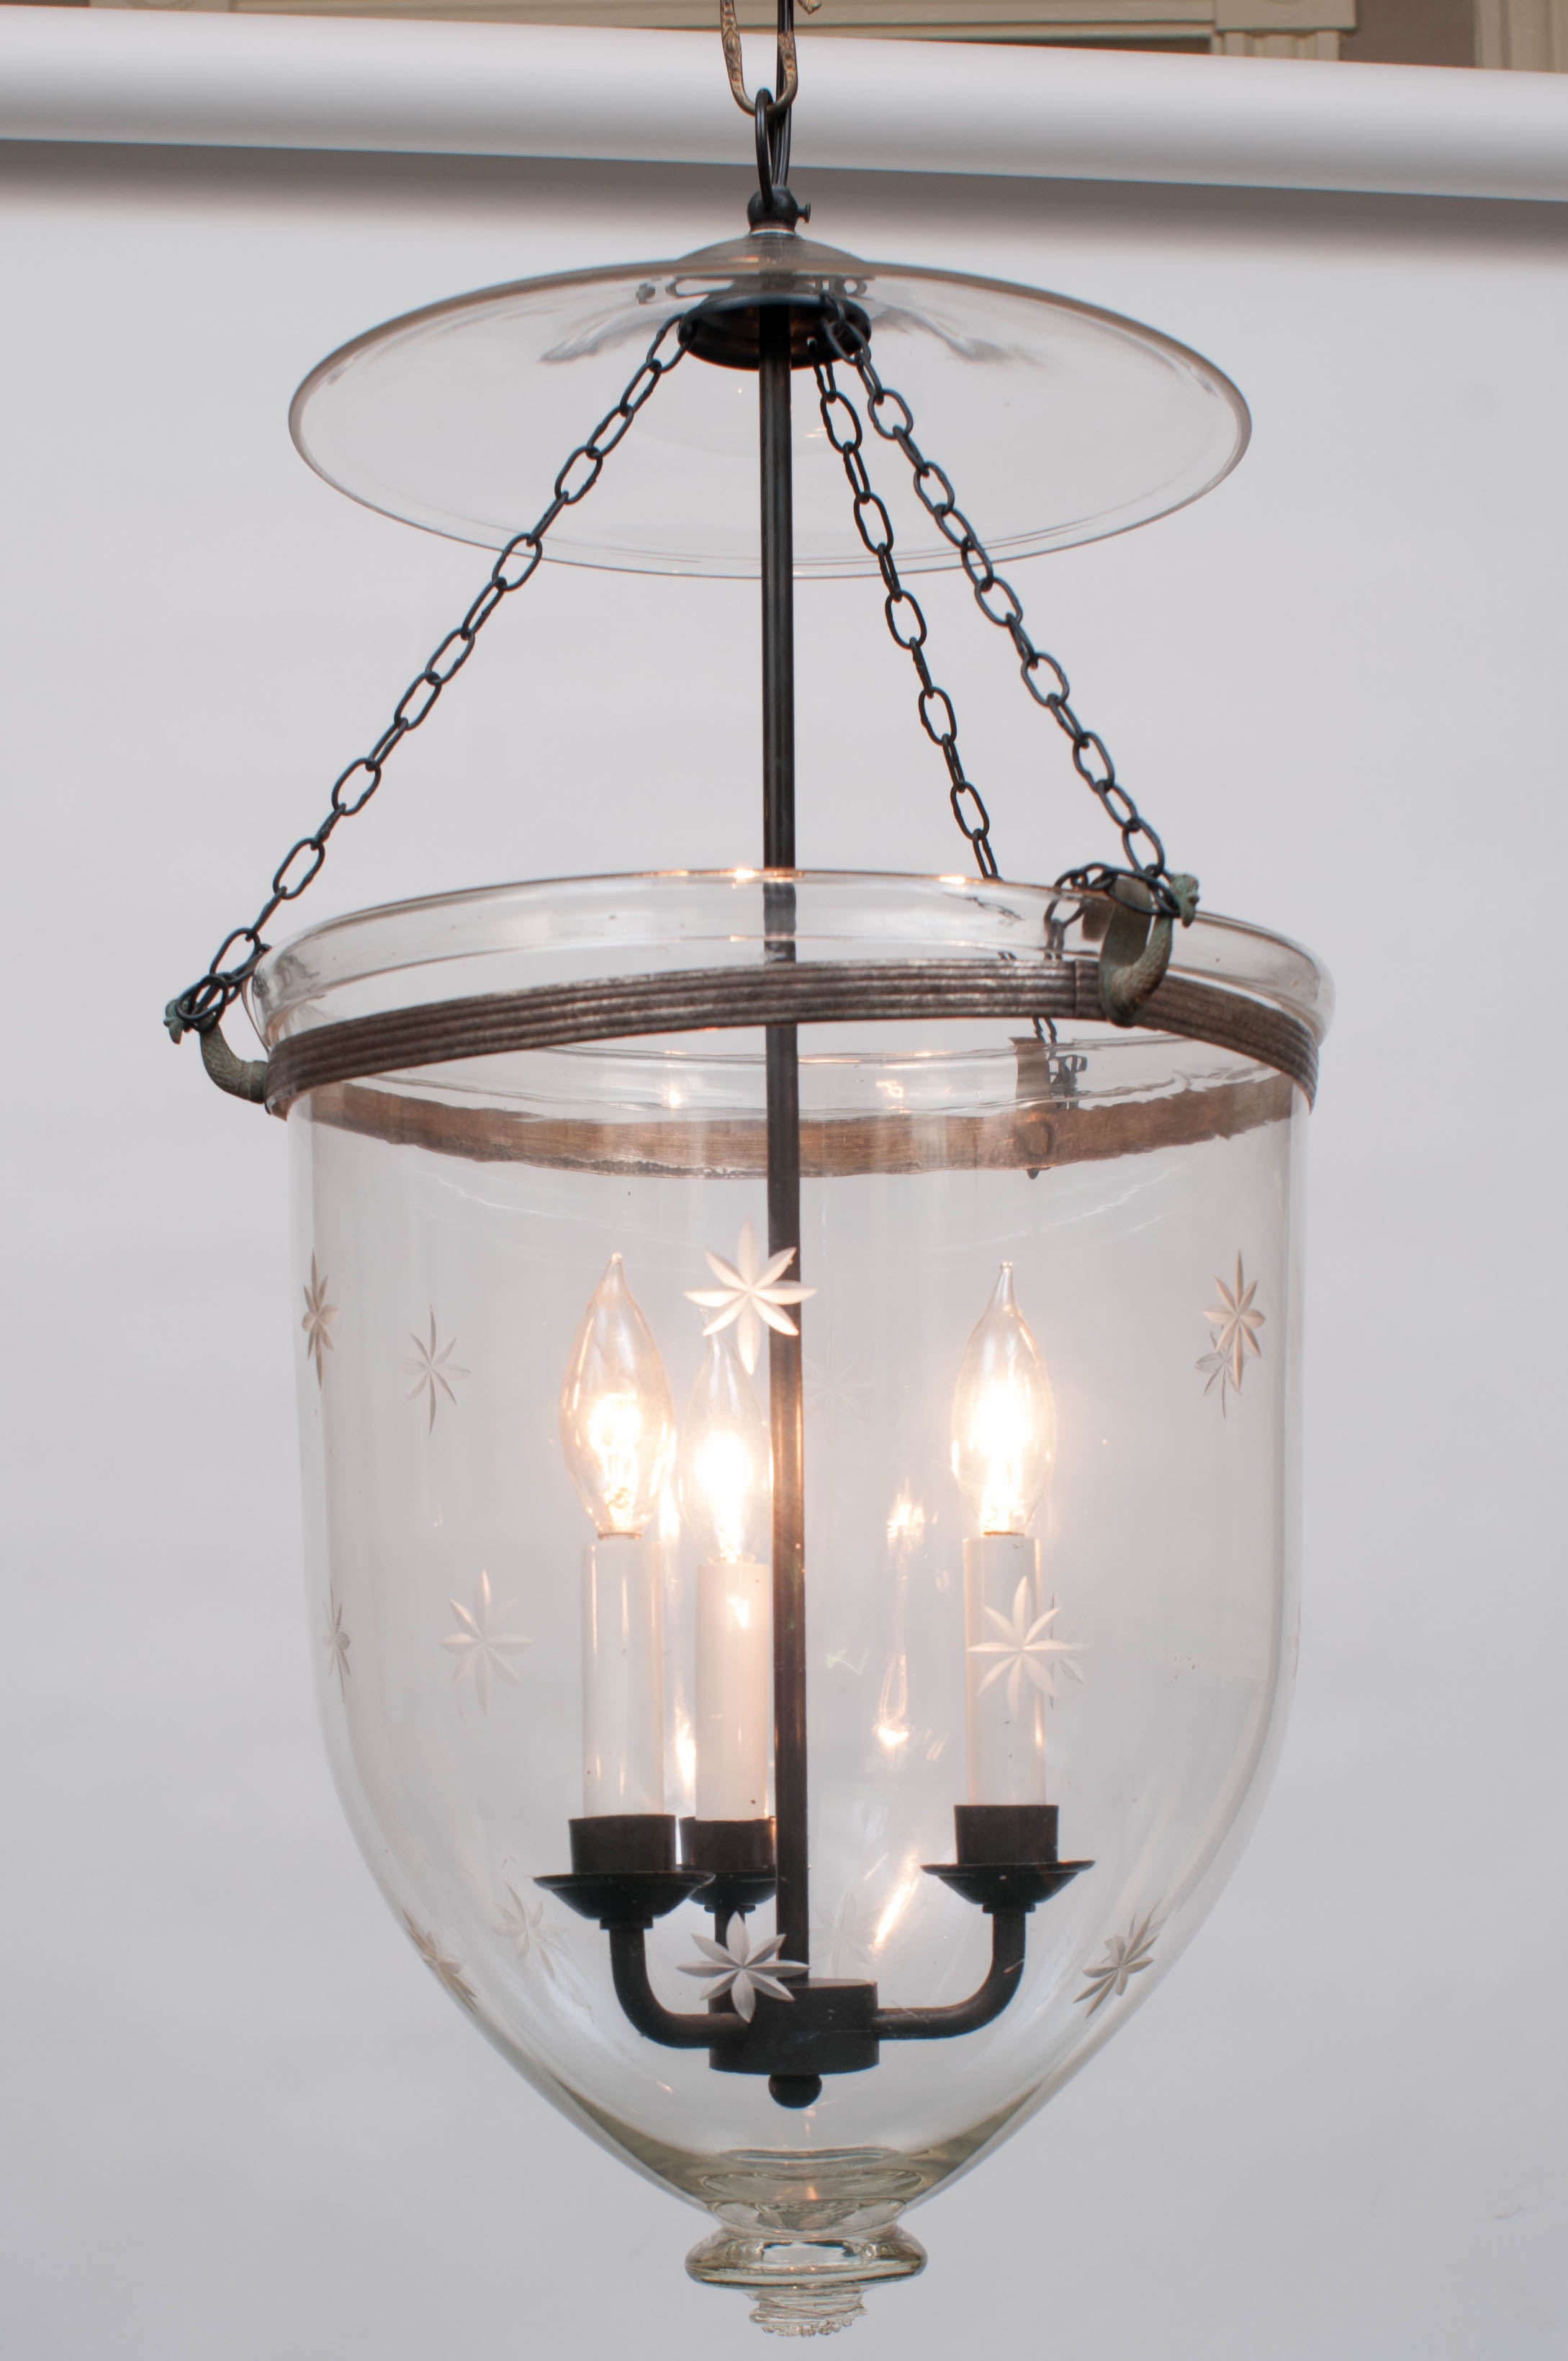 Large Star Bell Jar Lantern, circa 1850 England